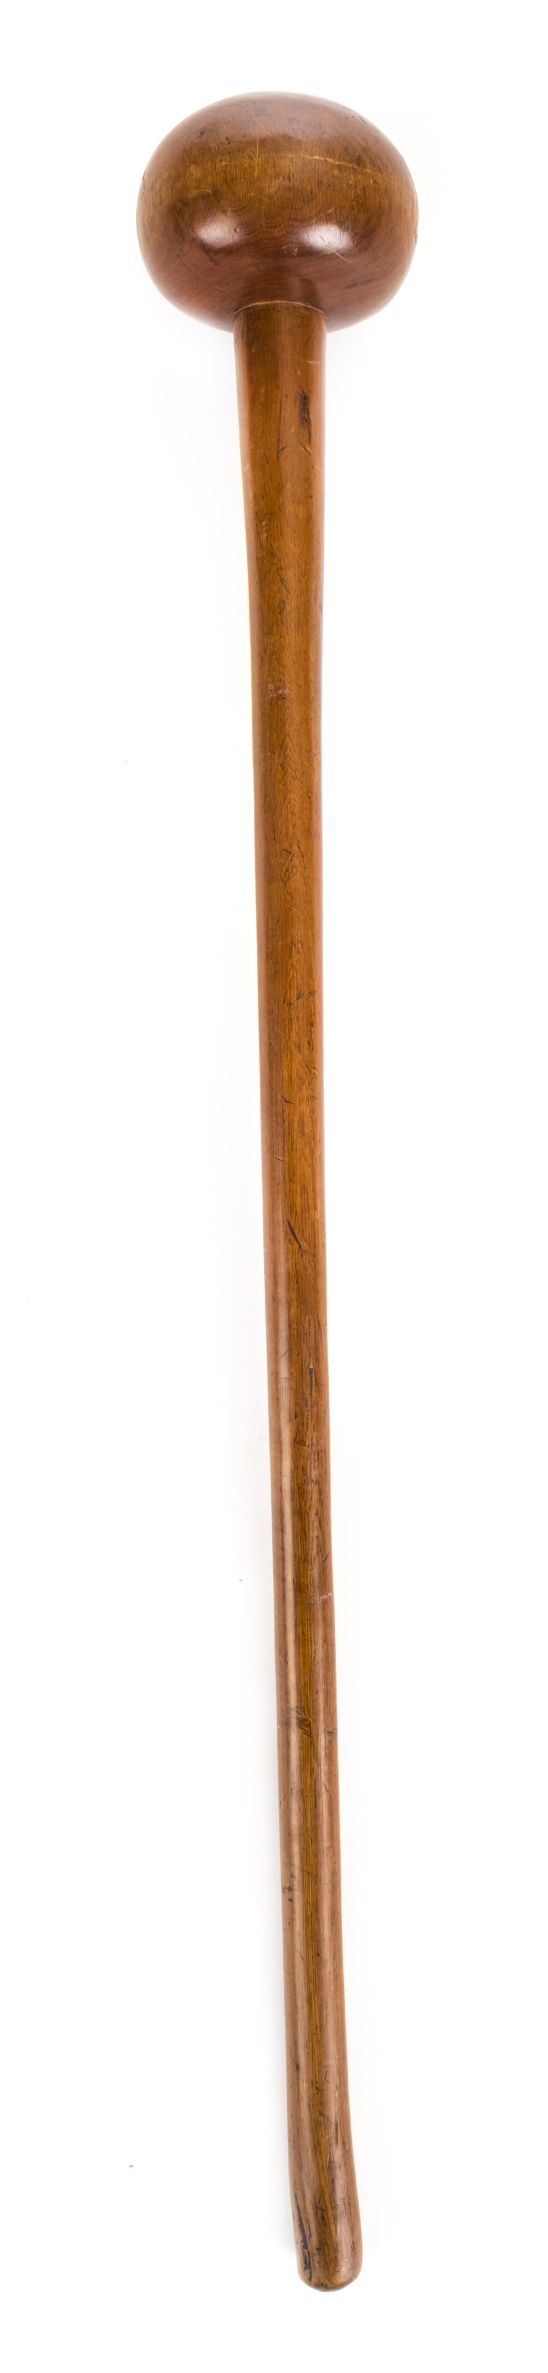 *Knobkerrie. Zulu hardwood knobkerrie, with large spherical head on long shaft, 68cm long (1)